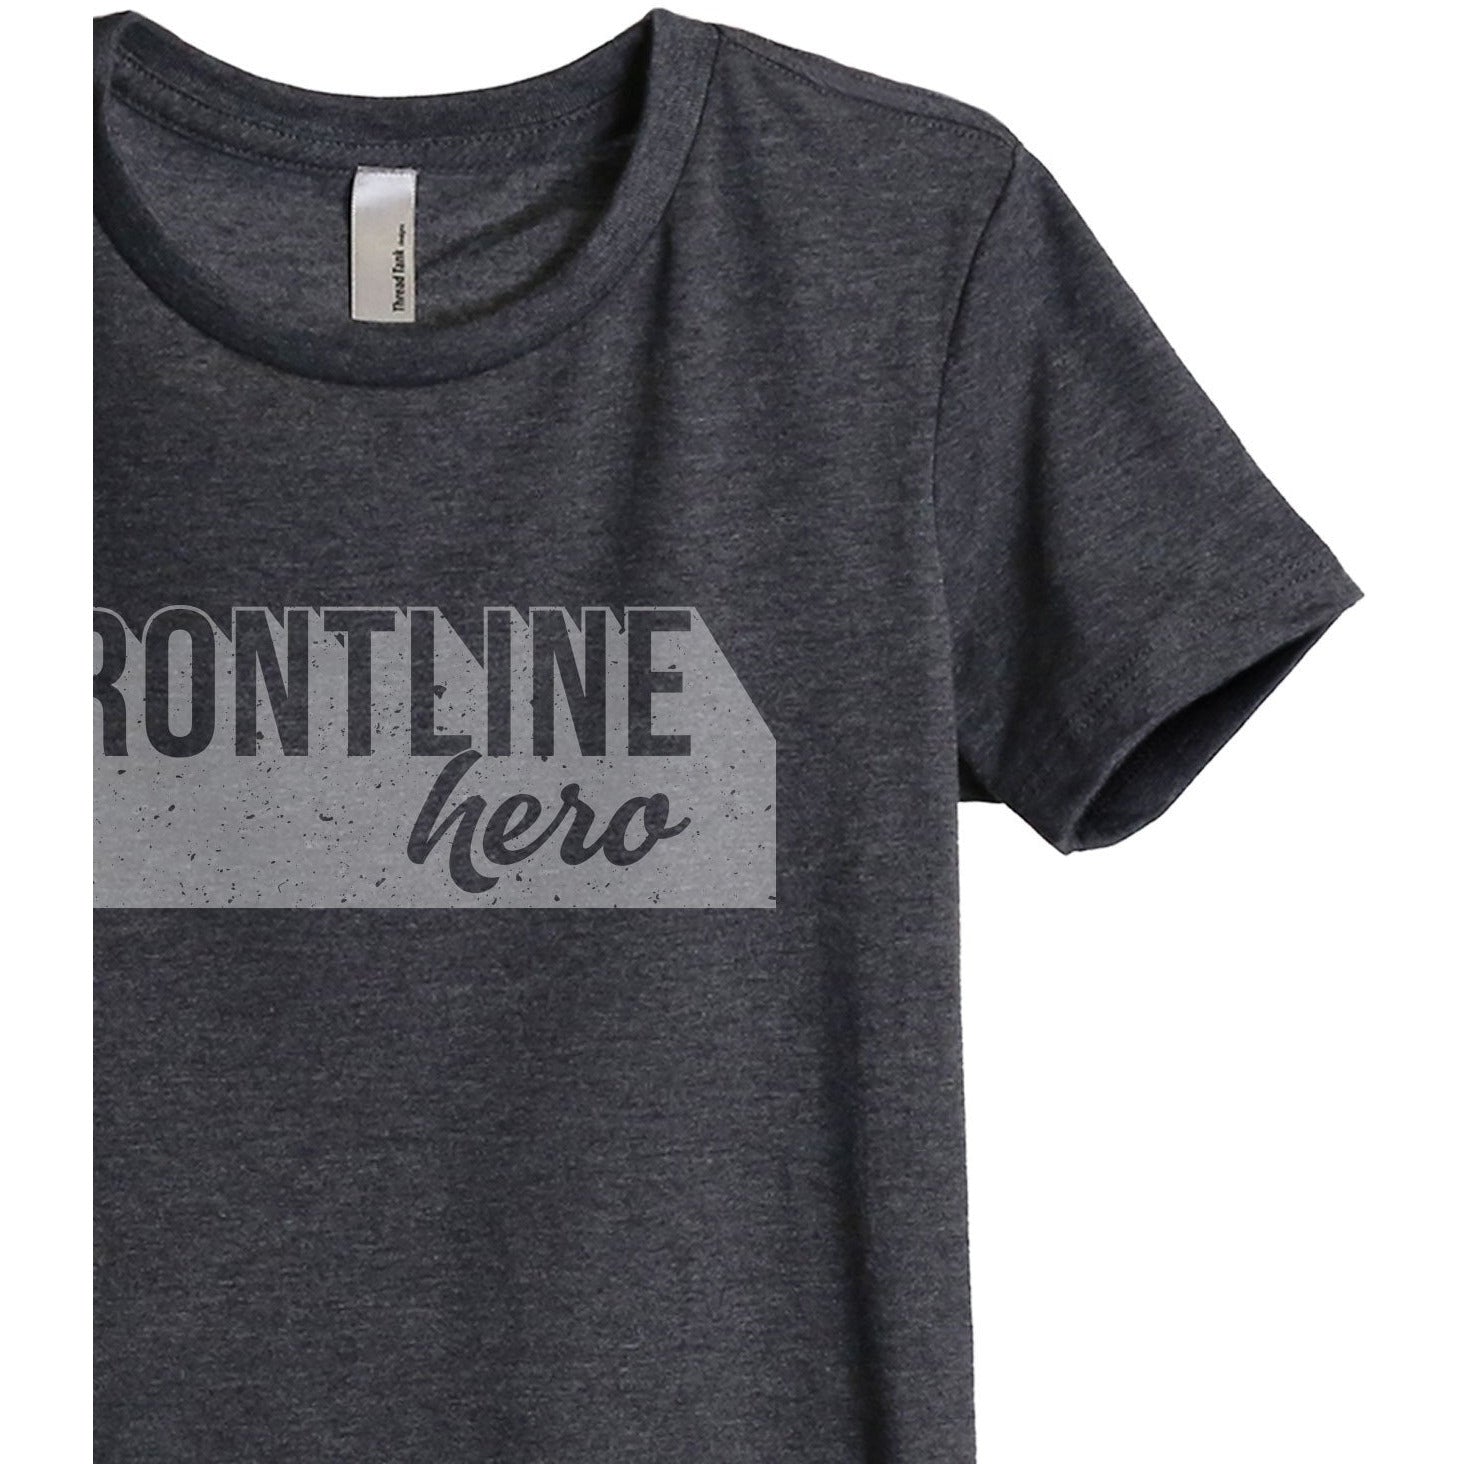 Frontline Hero Women's Relaxed Crewneck T-Shirt Top Tee Charcoal Grey Zoom Details